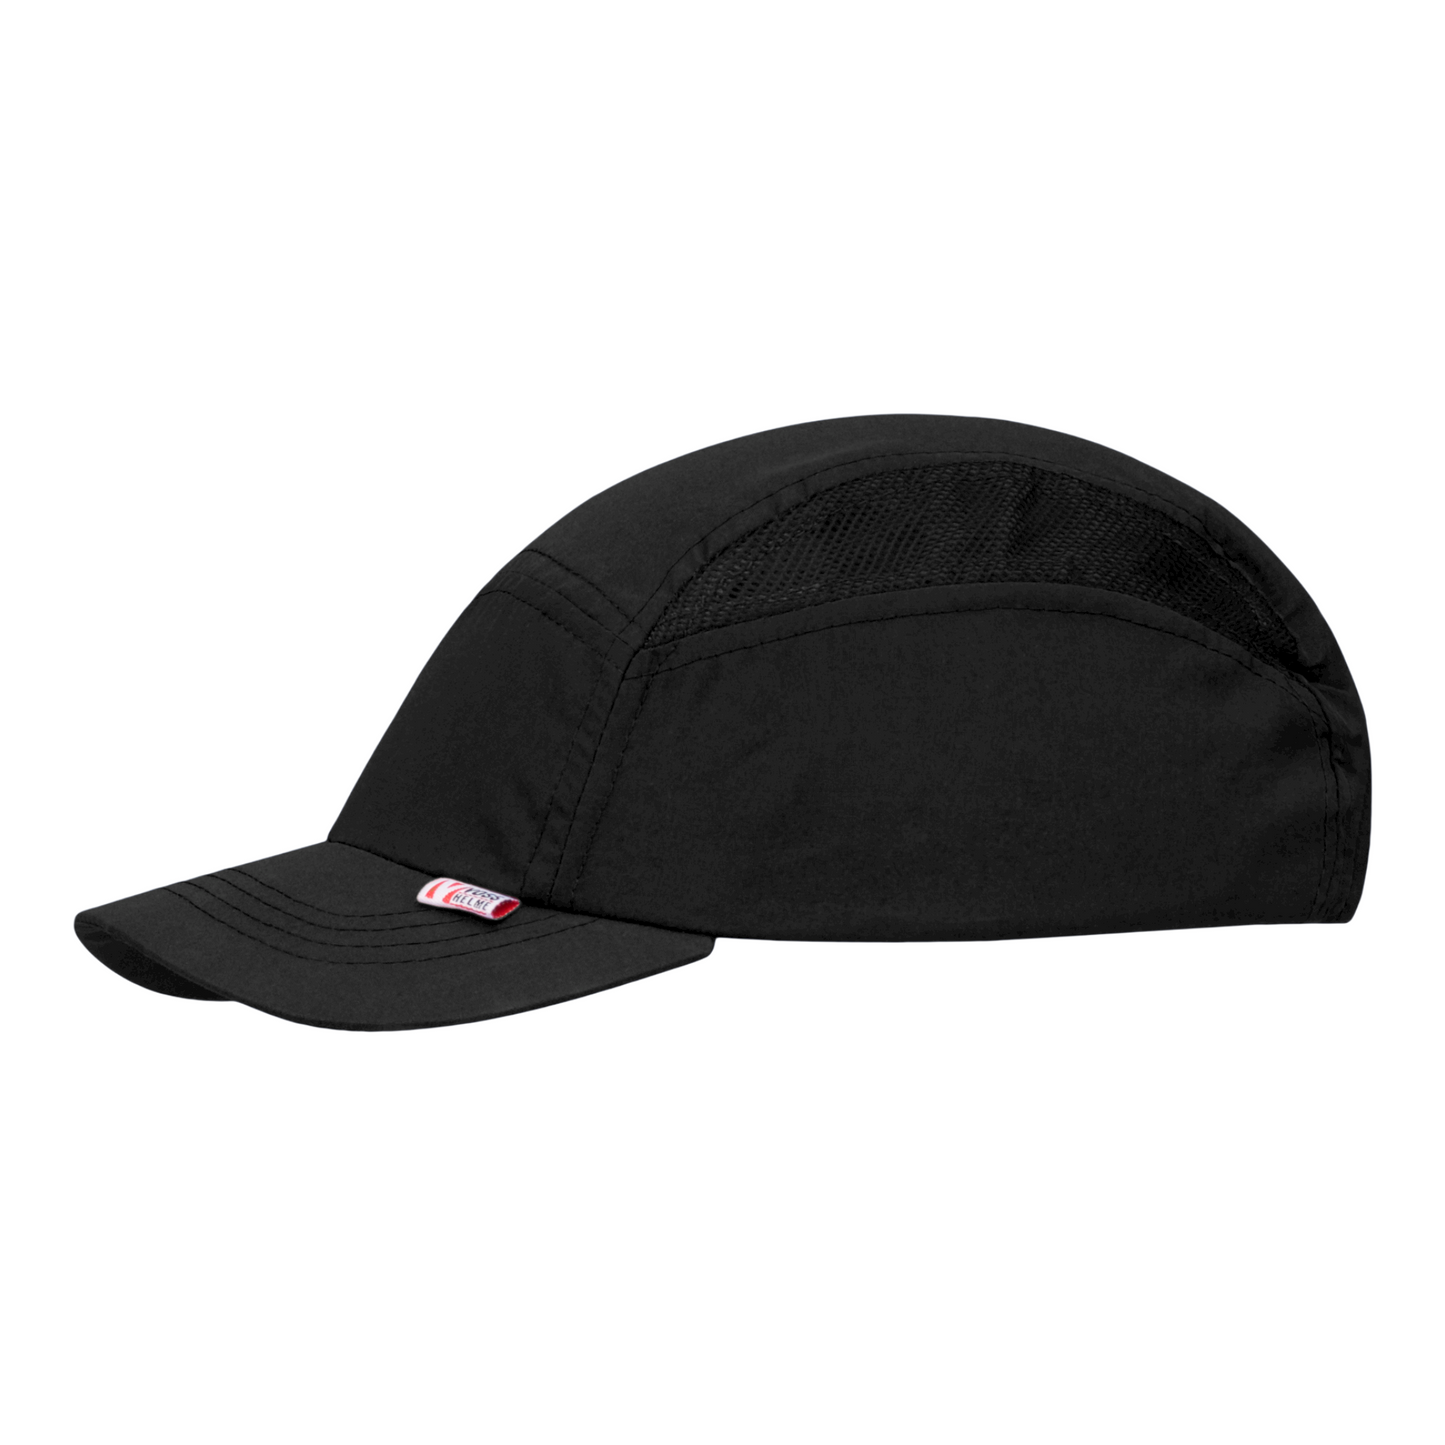 Modern-style bump cap